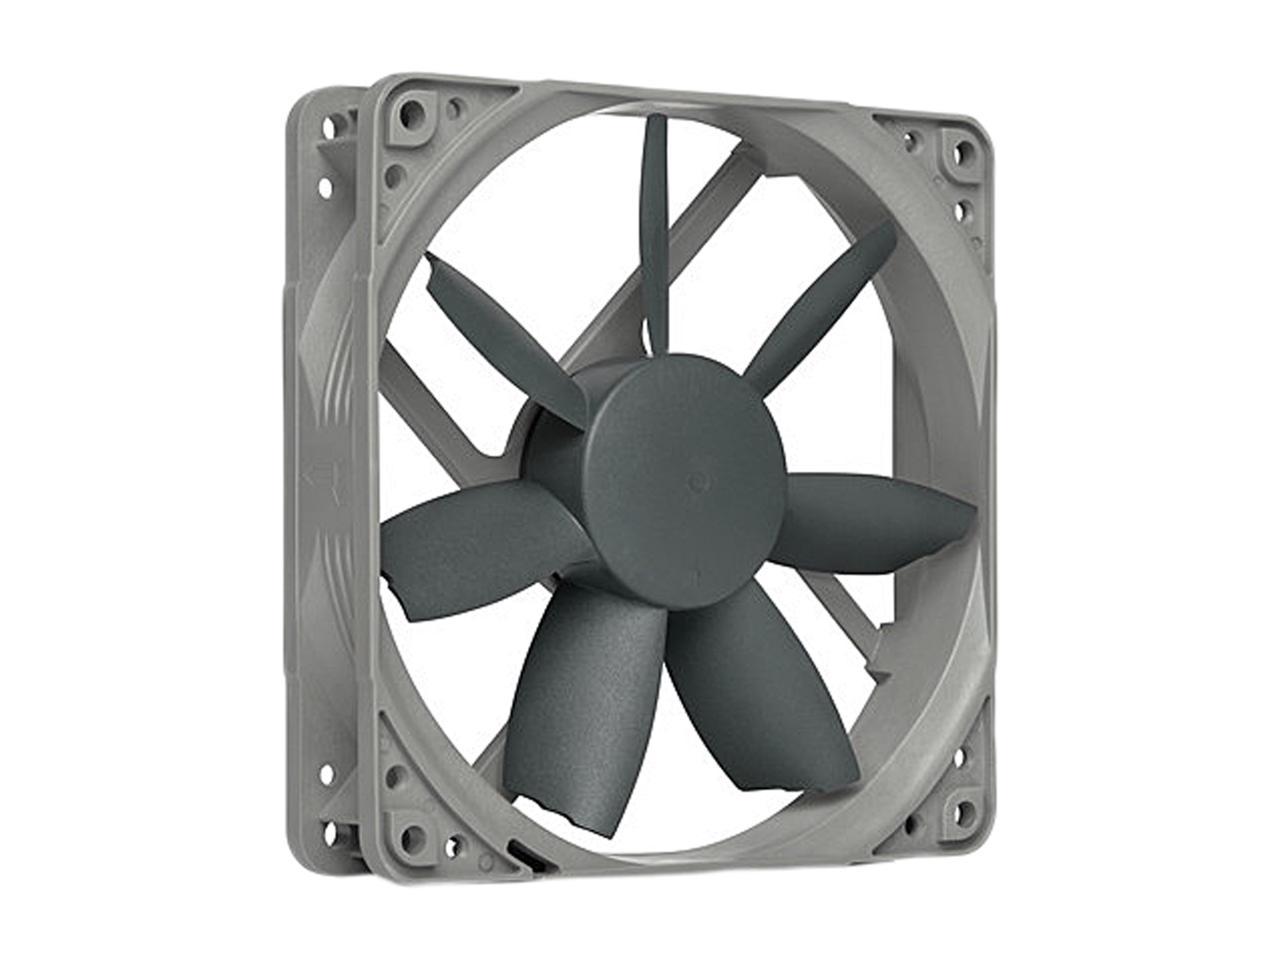 Noctua NF-S12B redux-1200, High Performance Cooling Fan, 3-Pin, 1200 RPM (120mm, Grey)